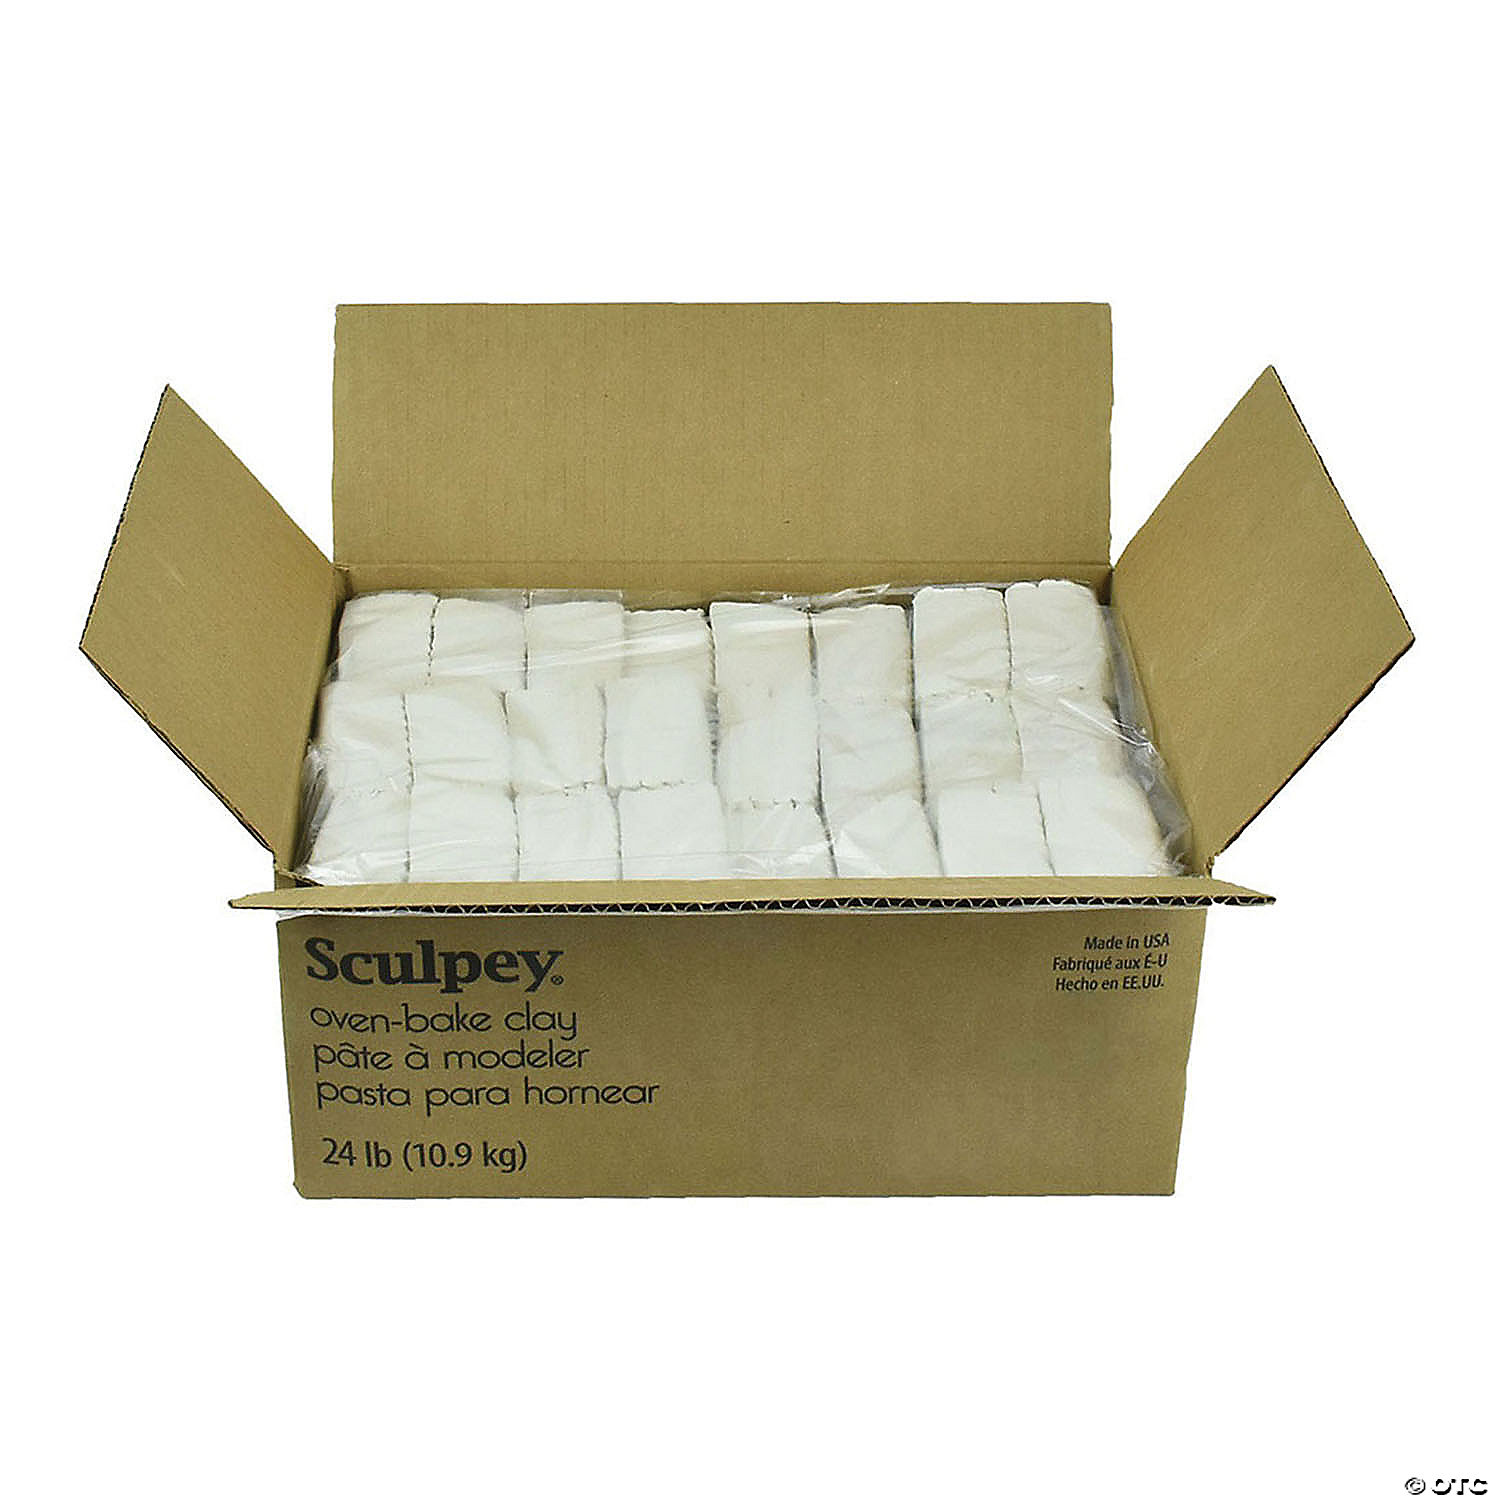 Sculpey Original Polymer Clay - White, 3.75lbs